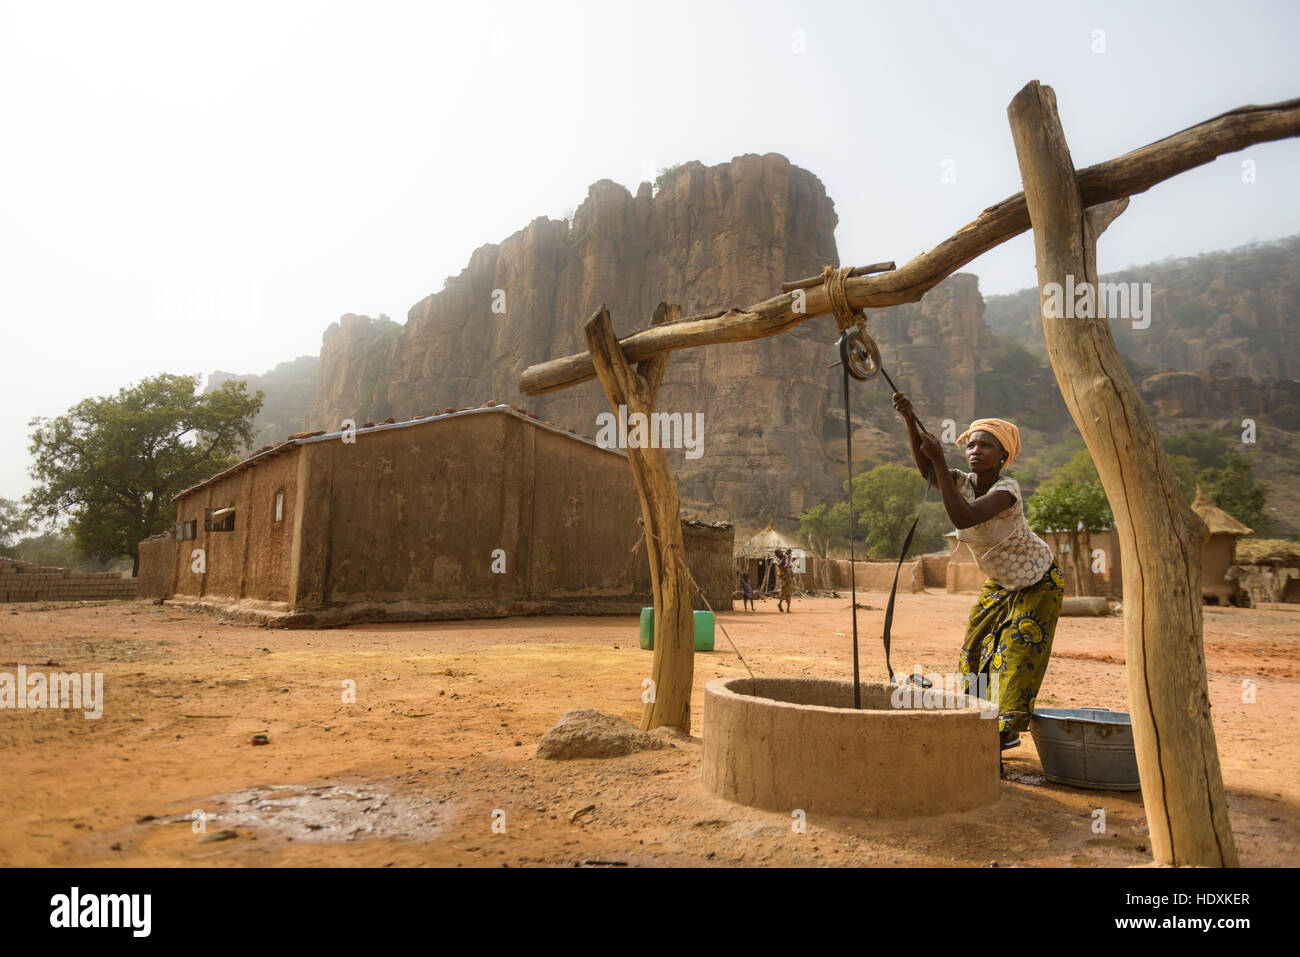 Village life in rural Mali, Stock Photo